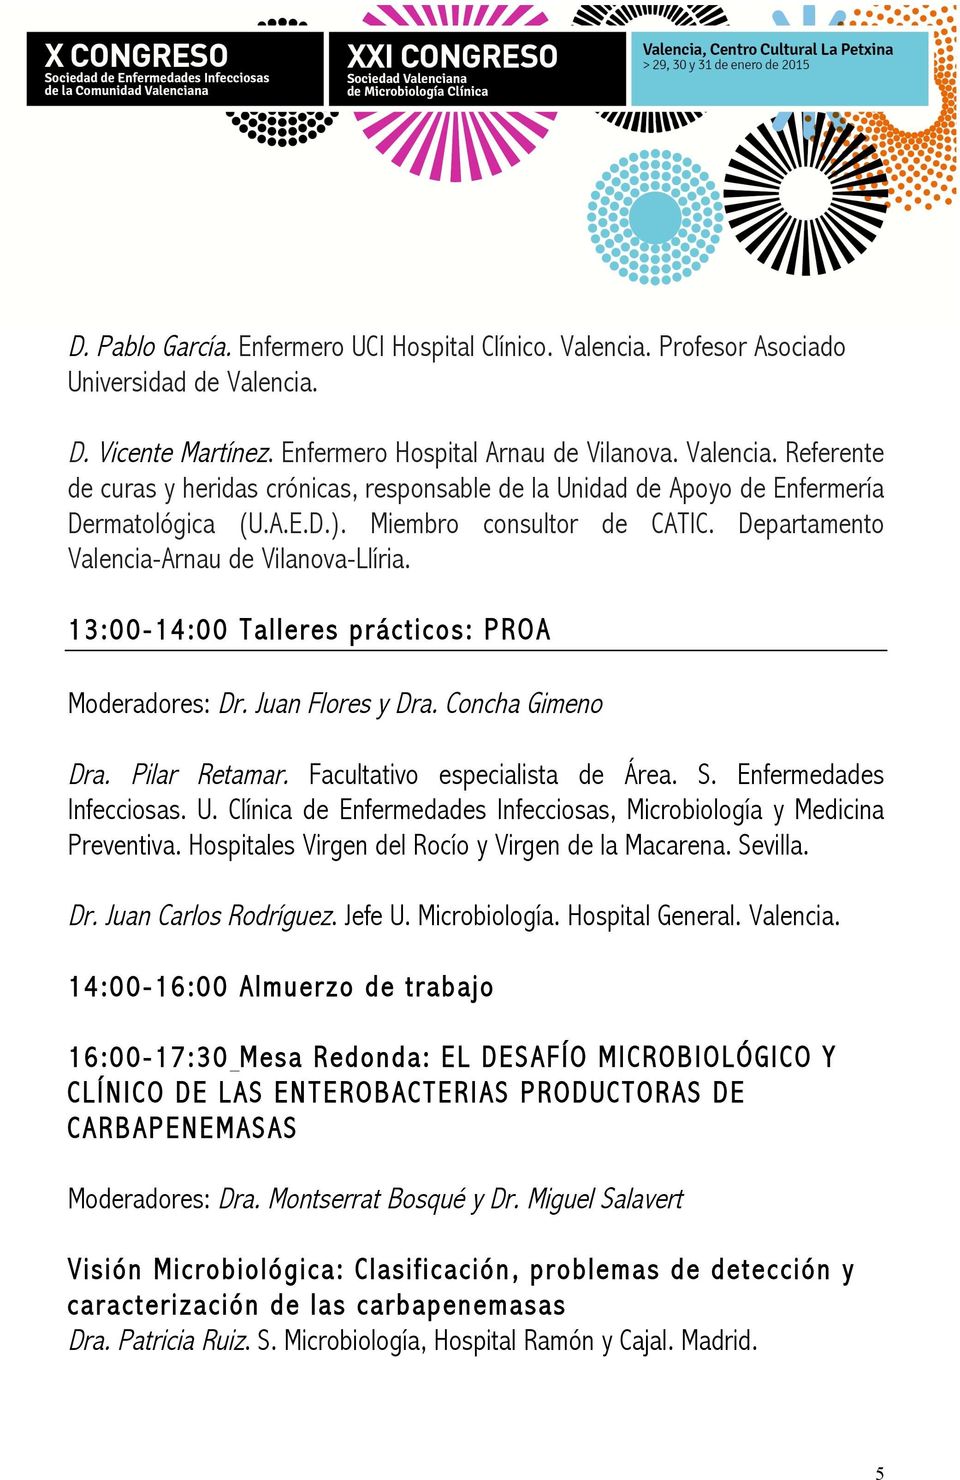 13:00-14:00 Talleres prácticos: PROA Moderadores: Dr. Juan Flores y Dra. Concha Gimeno Dra. Pilar Retamar. Facultativo especialista de Área. S. Enfermedades Infecciosas. U.